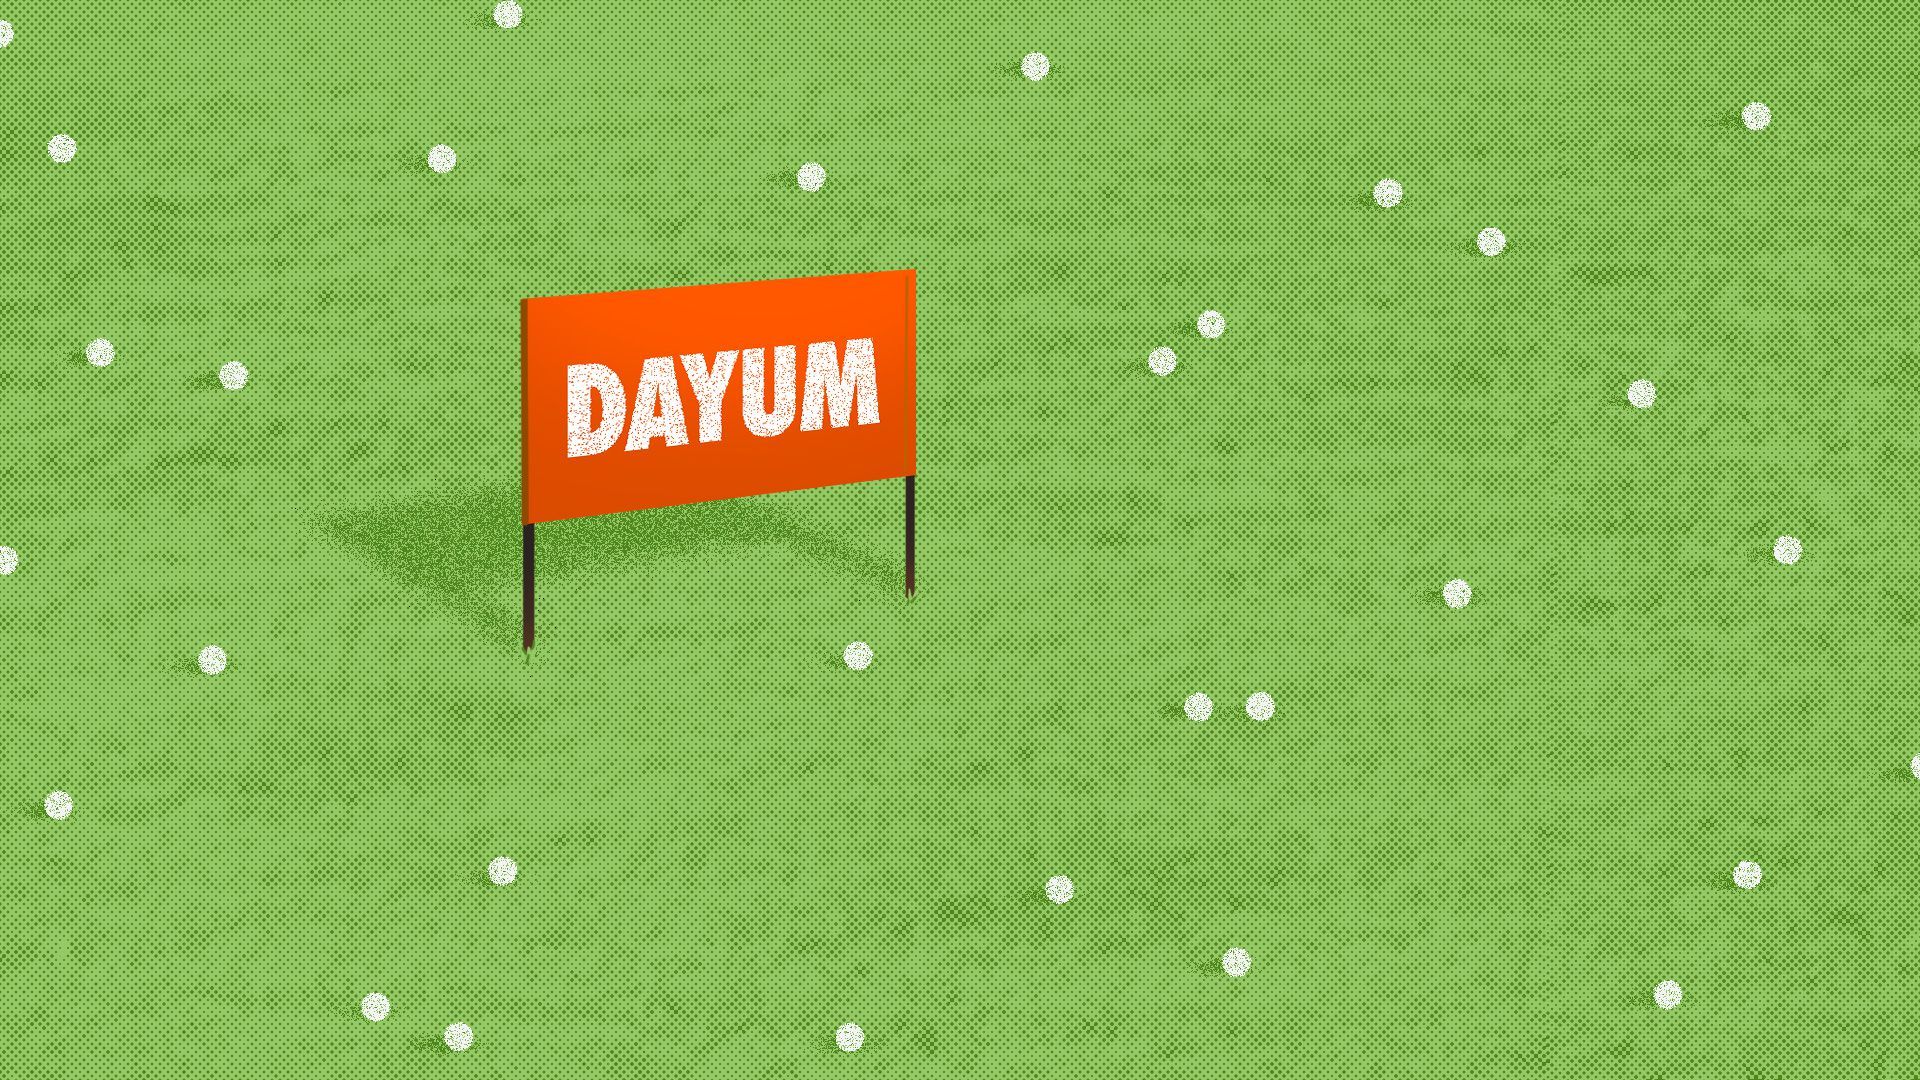 A golf driving range sign reading 'Dayum'